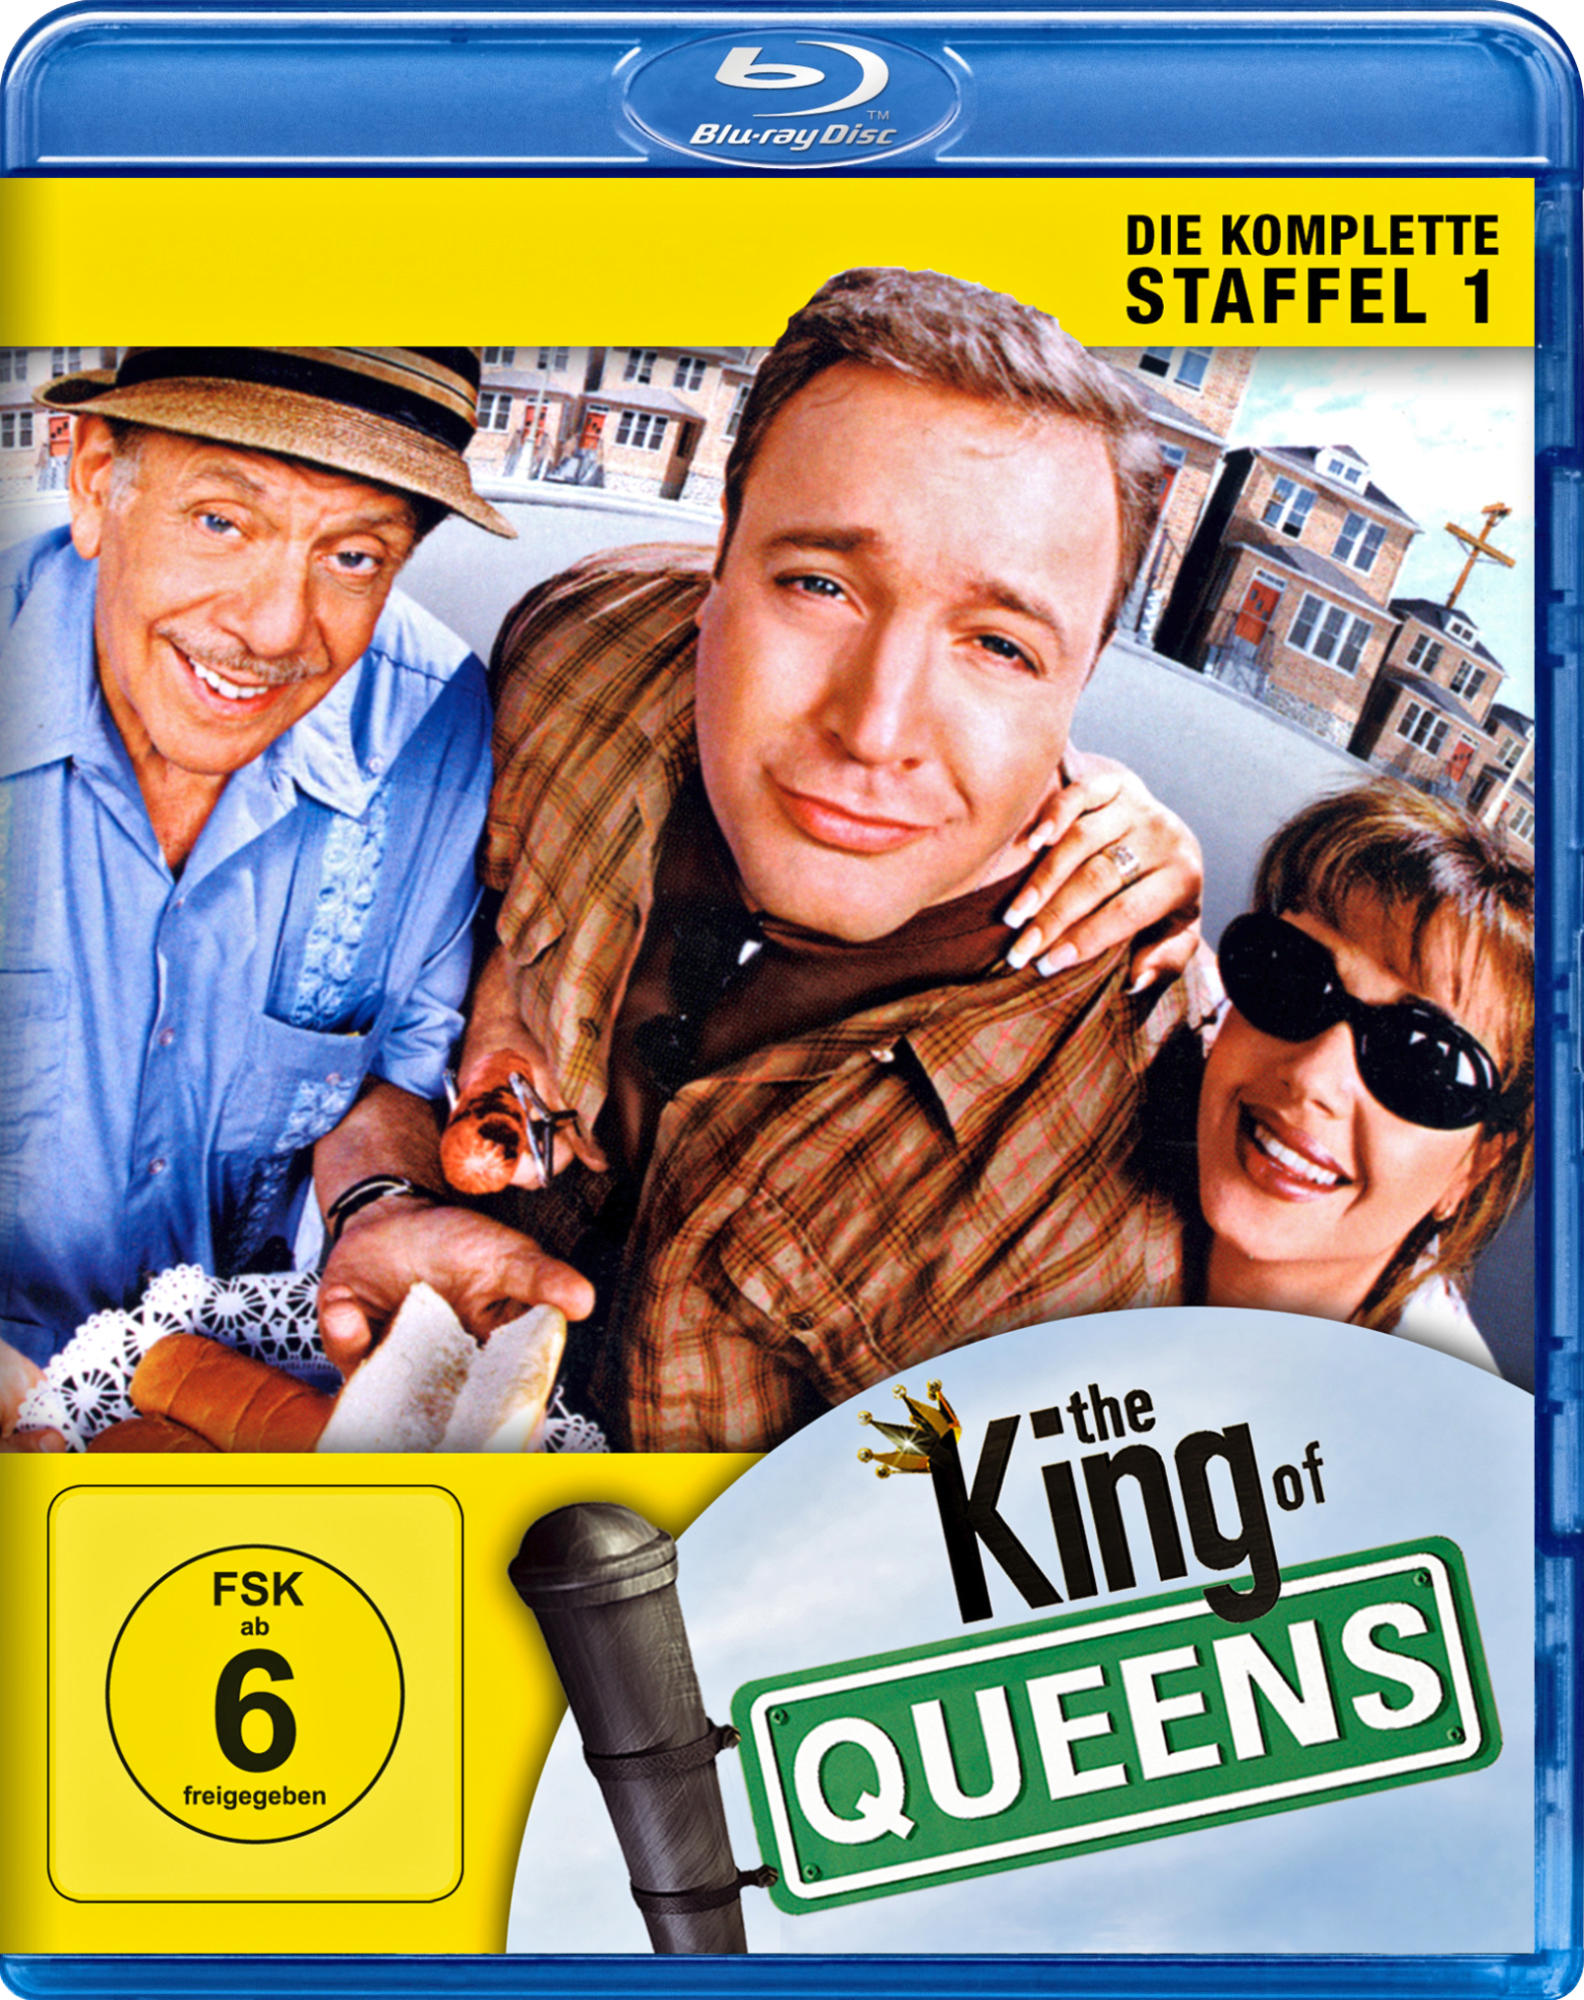 Blu-ray Queens of 1 Staffel - King